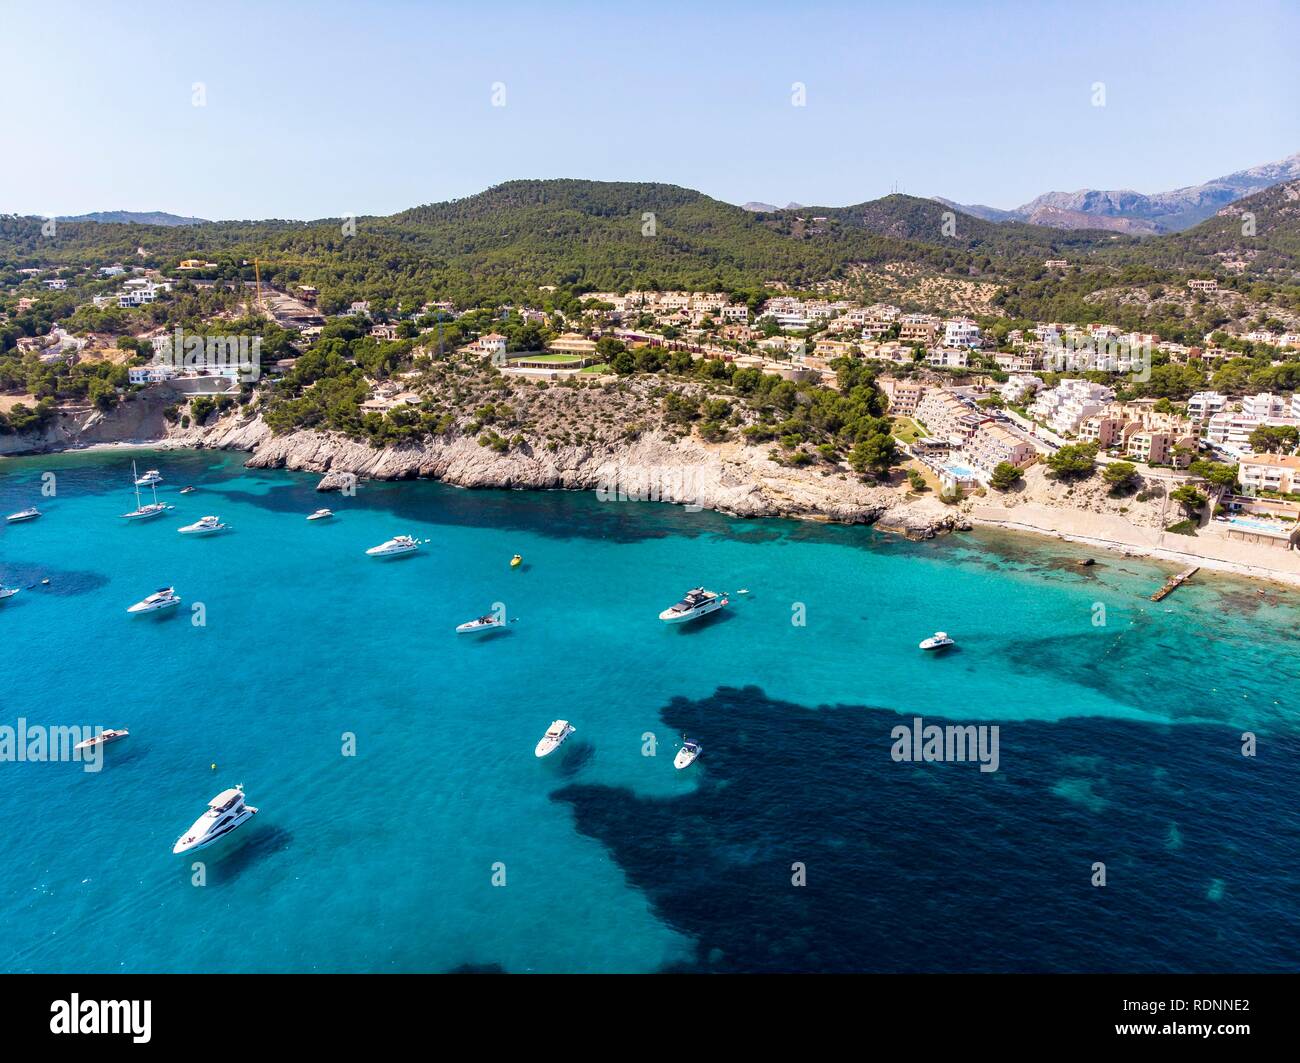 Aerial view, Camp de Mar with hotels and beaches, Camp de Mar, Costa de la Calma, Majorca, Balearic Islands, Spain Stock Photo